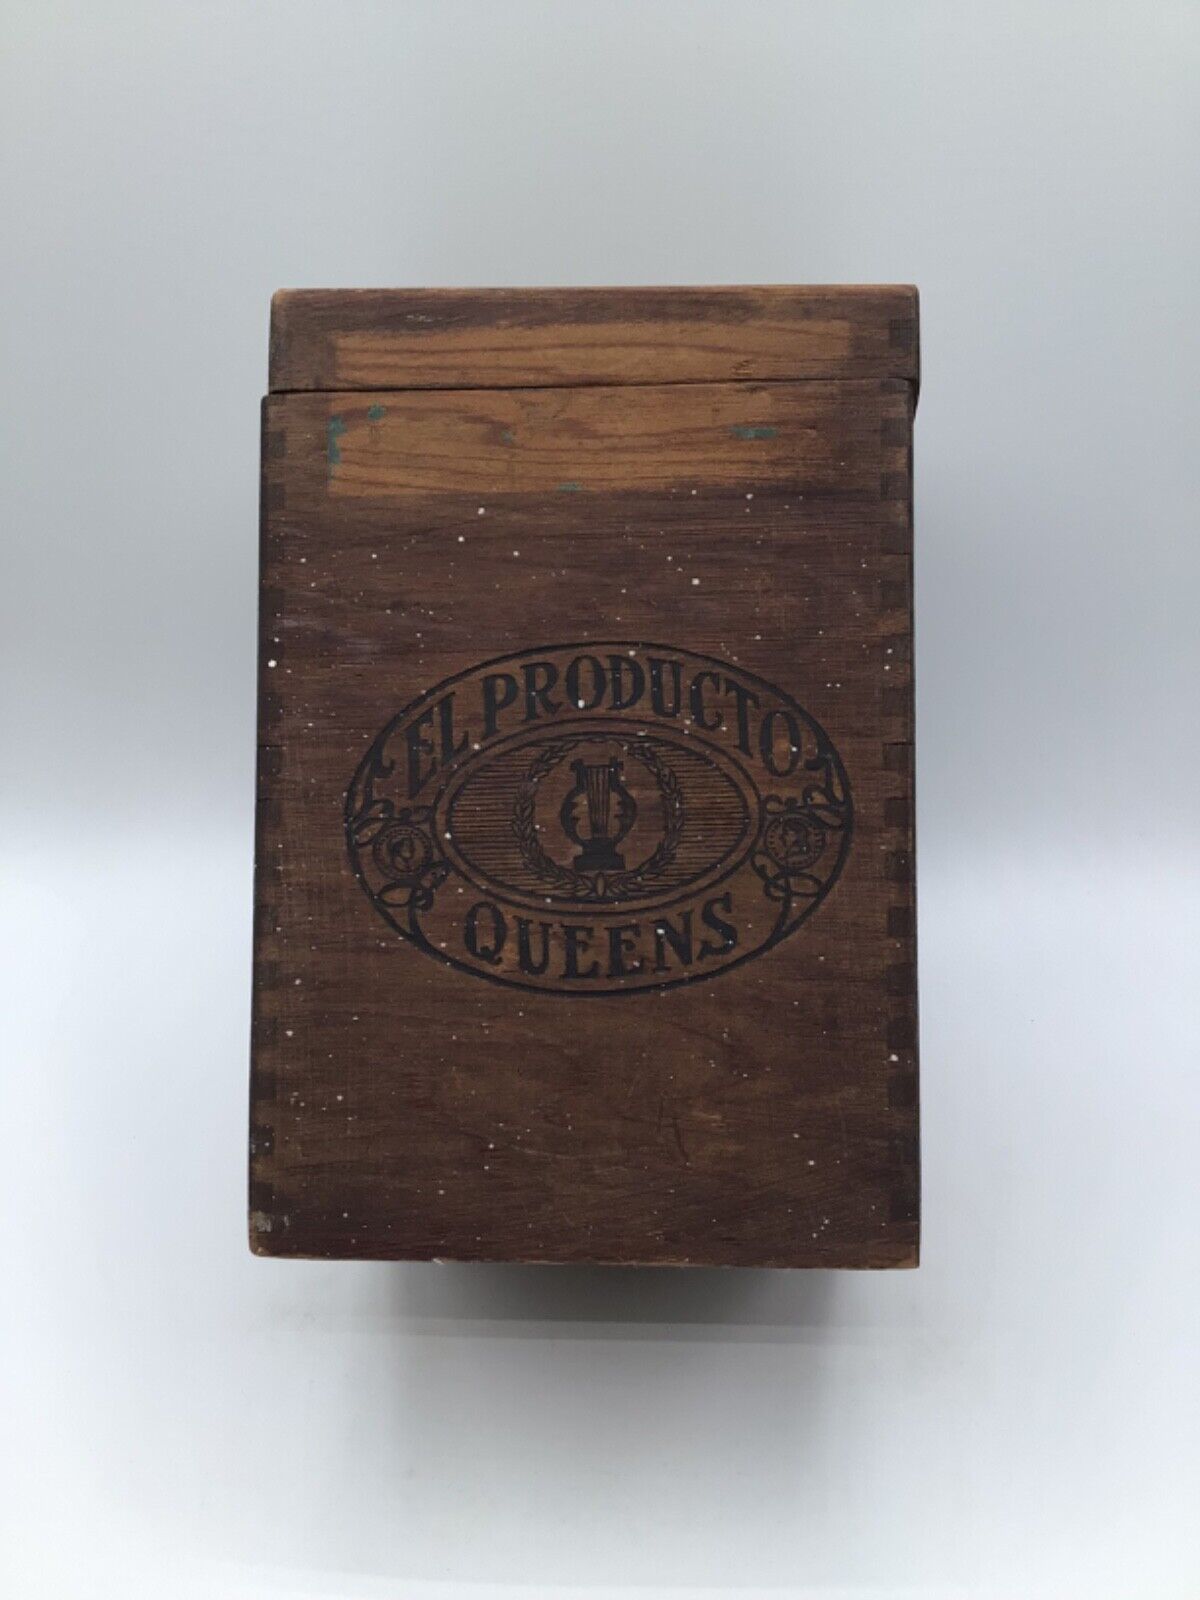 Vintage El Producto Queens Hinged Wood Counter Sales 25 Cent Cigar Box 7”